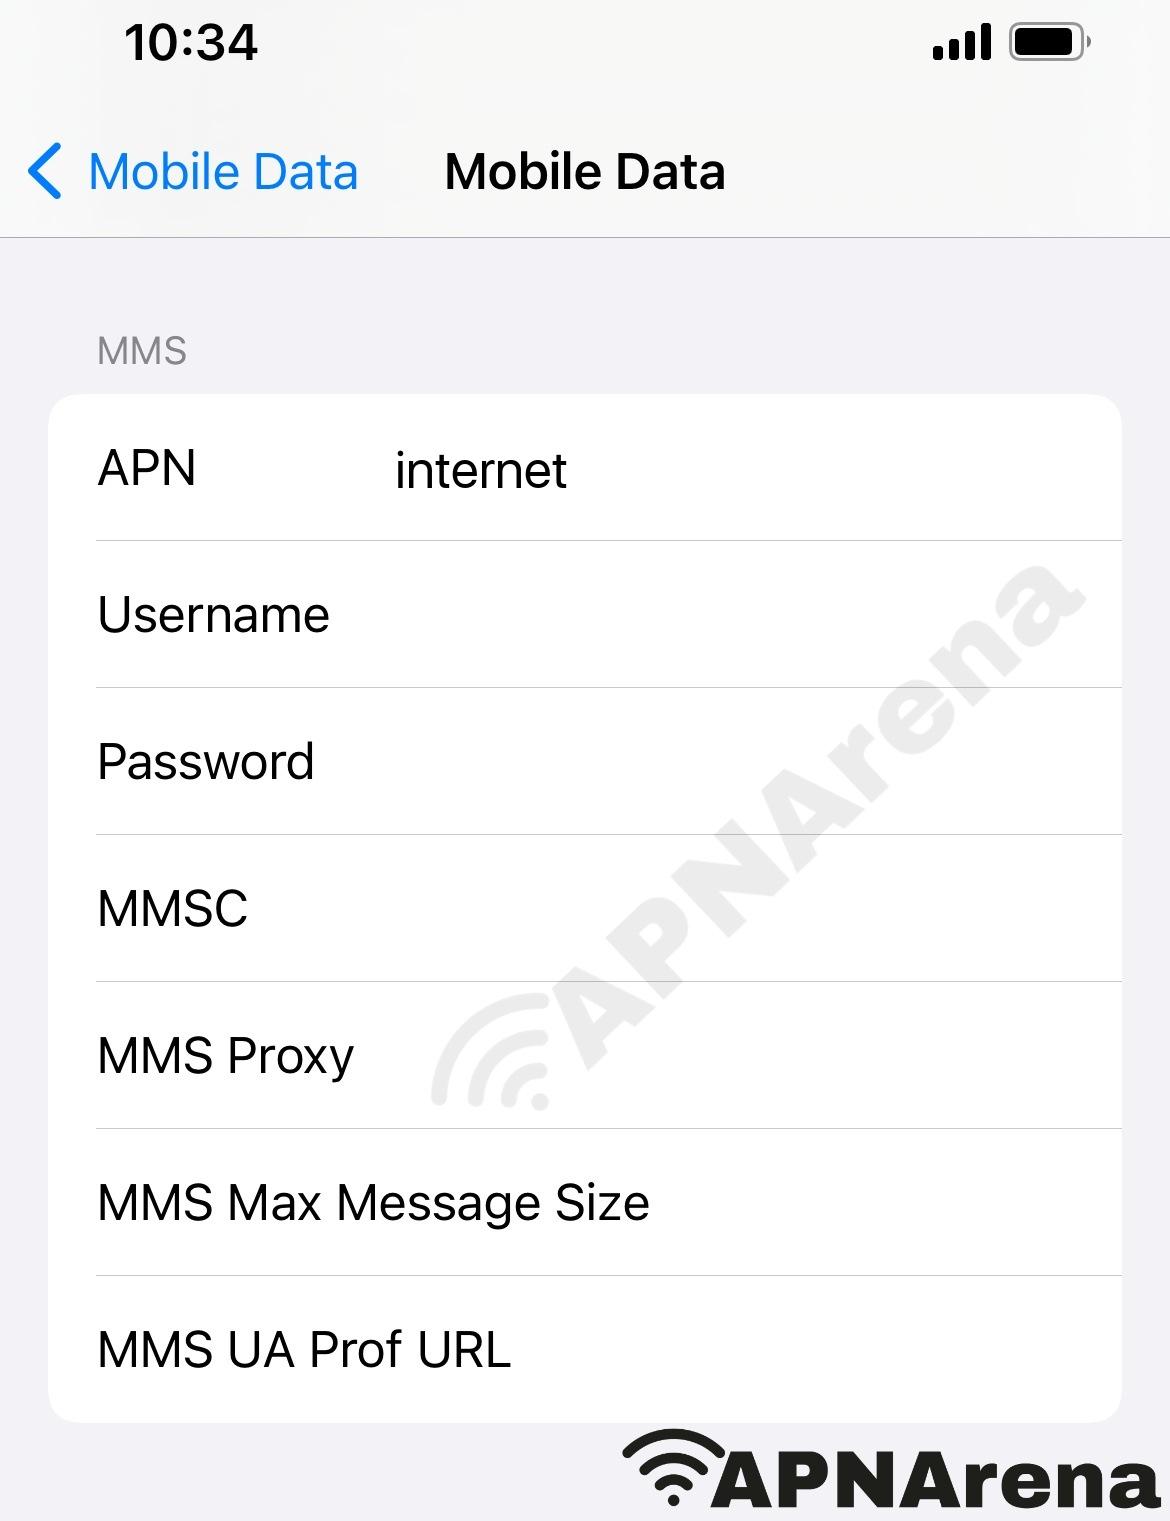 Friendi mobile Oman MMS Settings for iPhone